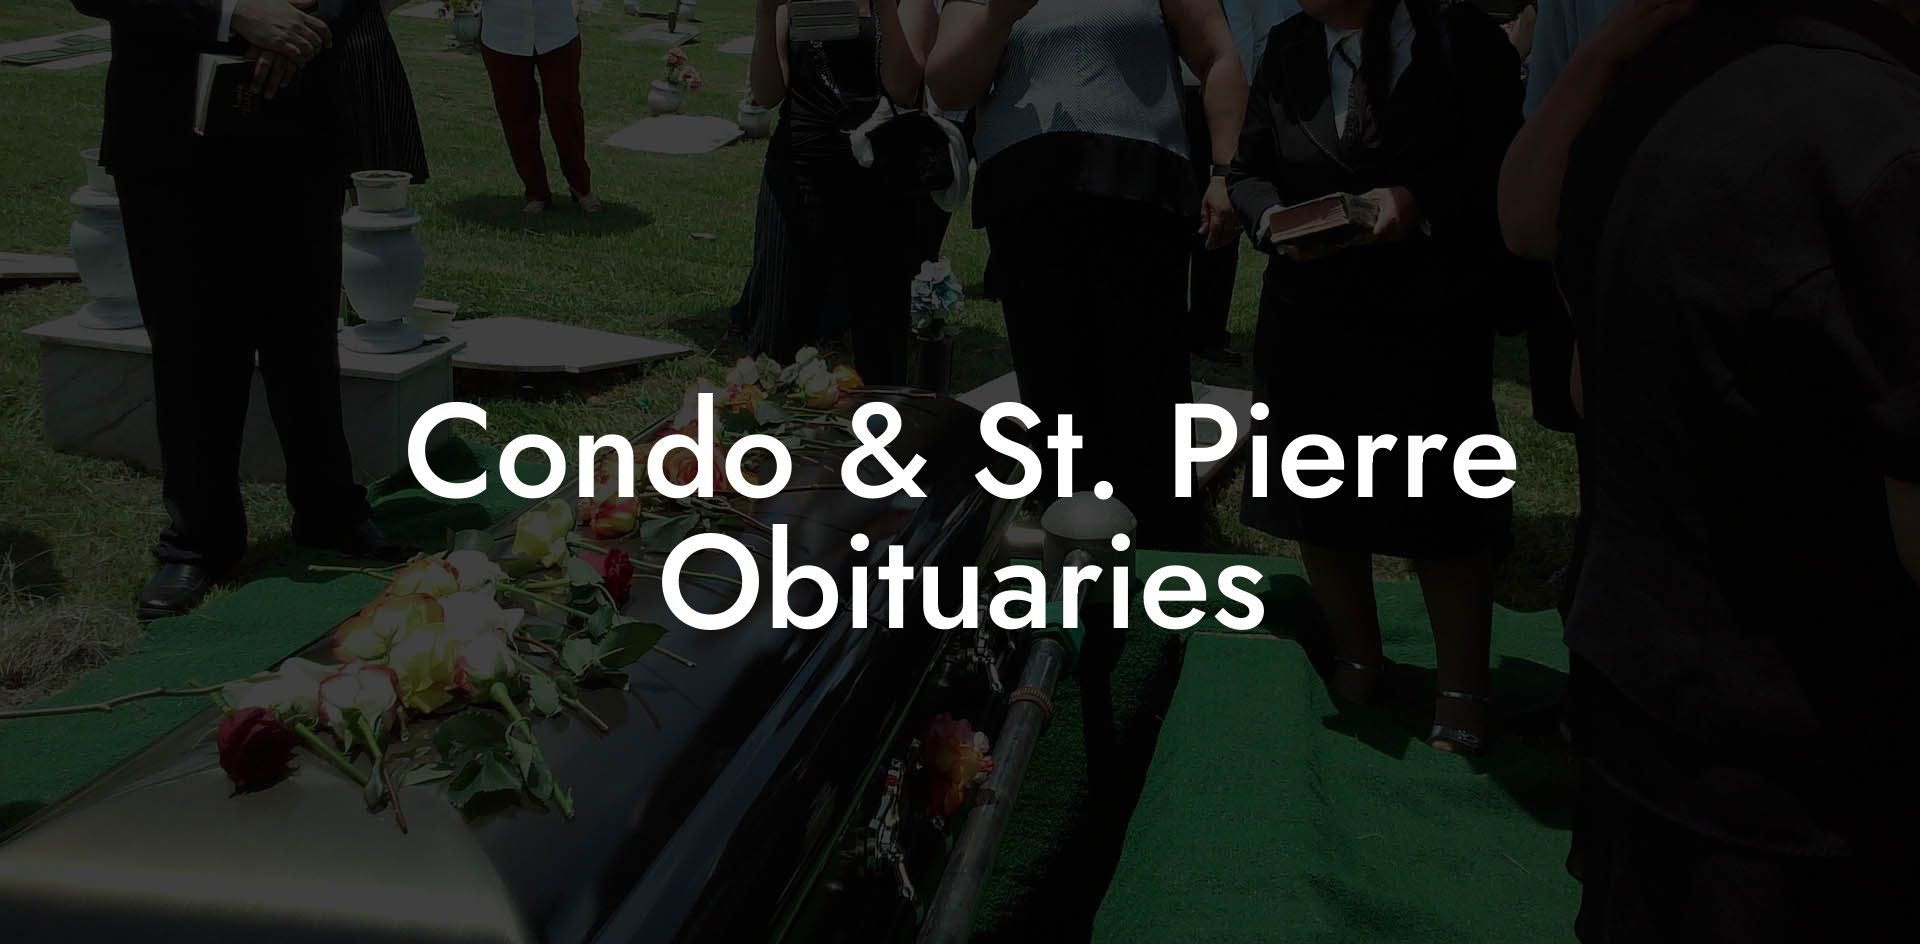 Condo & St. Pierre Obituaries